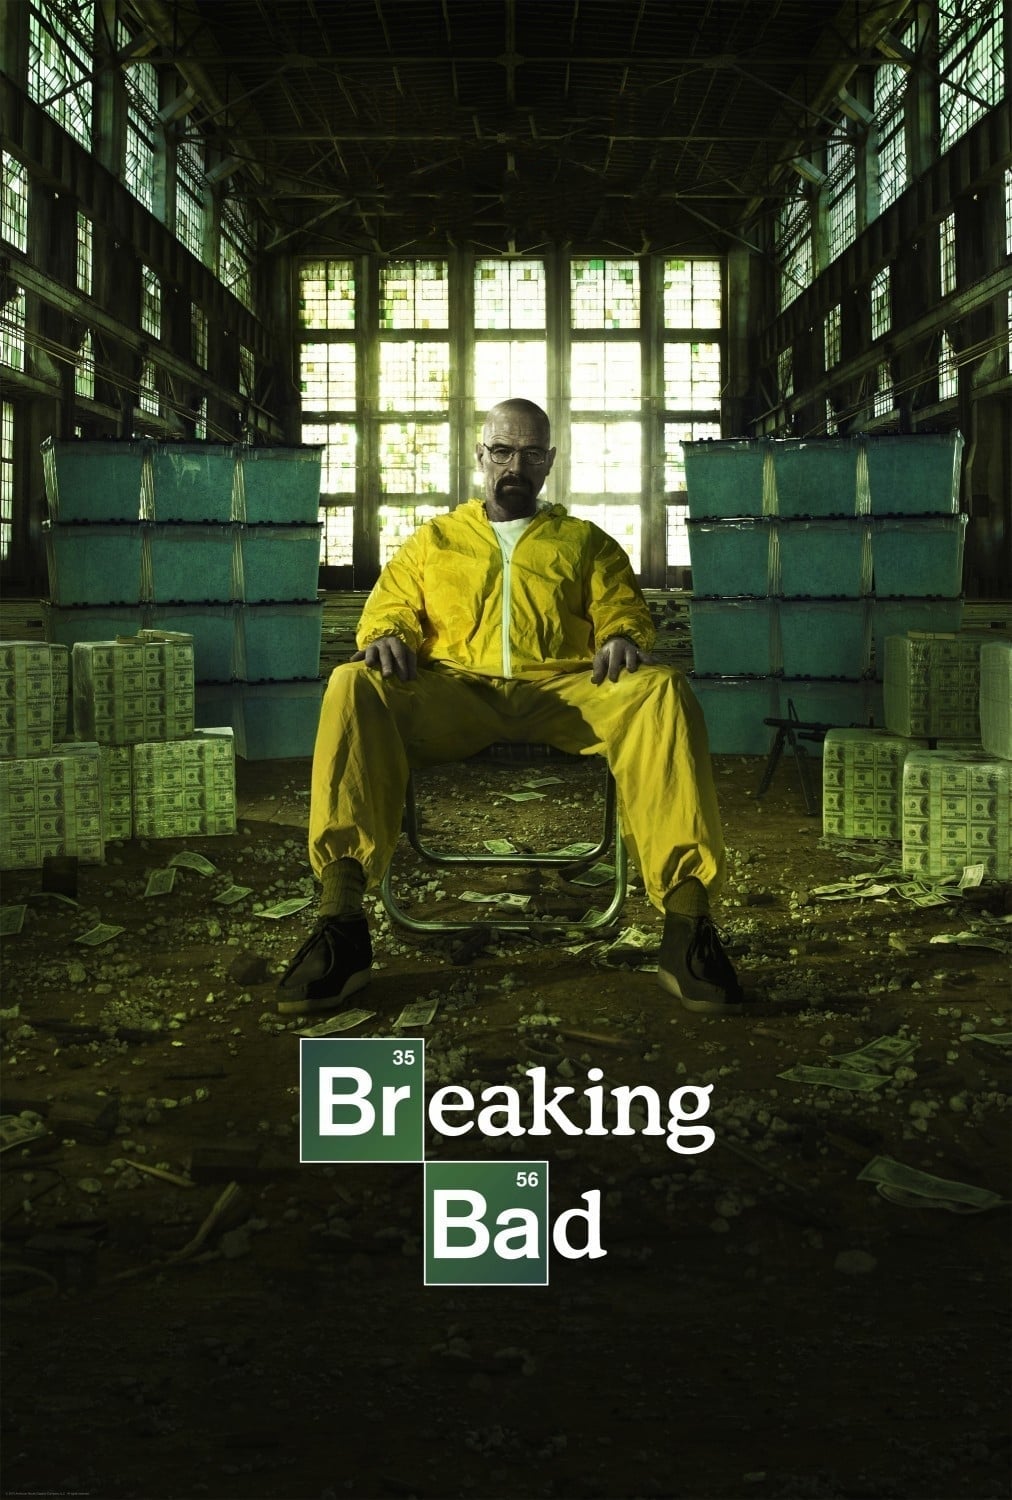 Breaking Bad 1080p español latino 2008 temporada 1, 2, 3, 4, 5